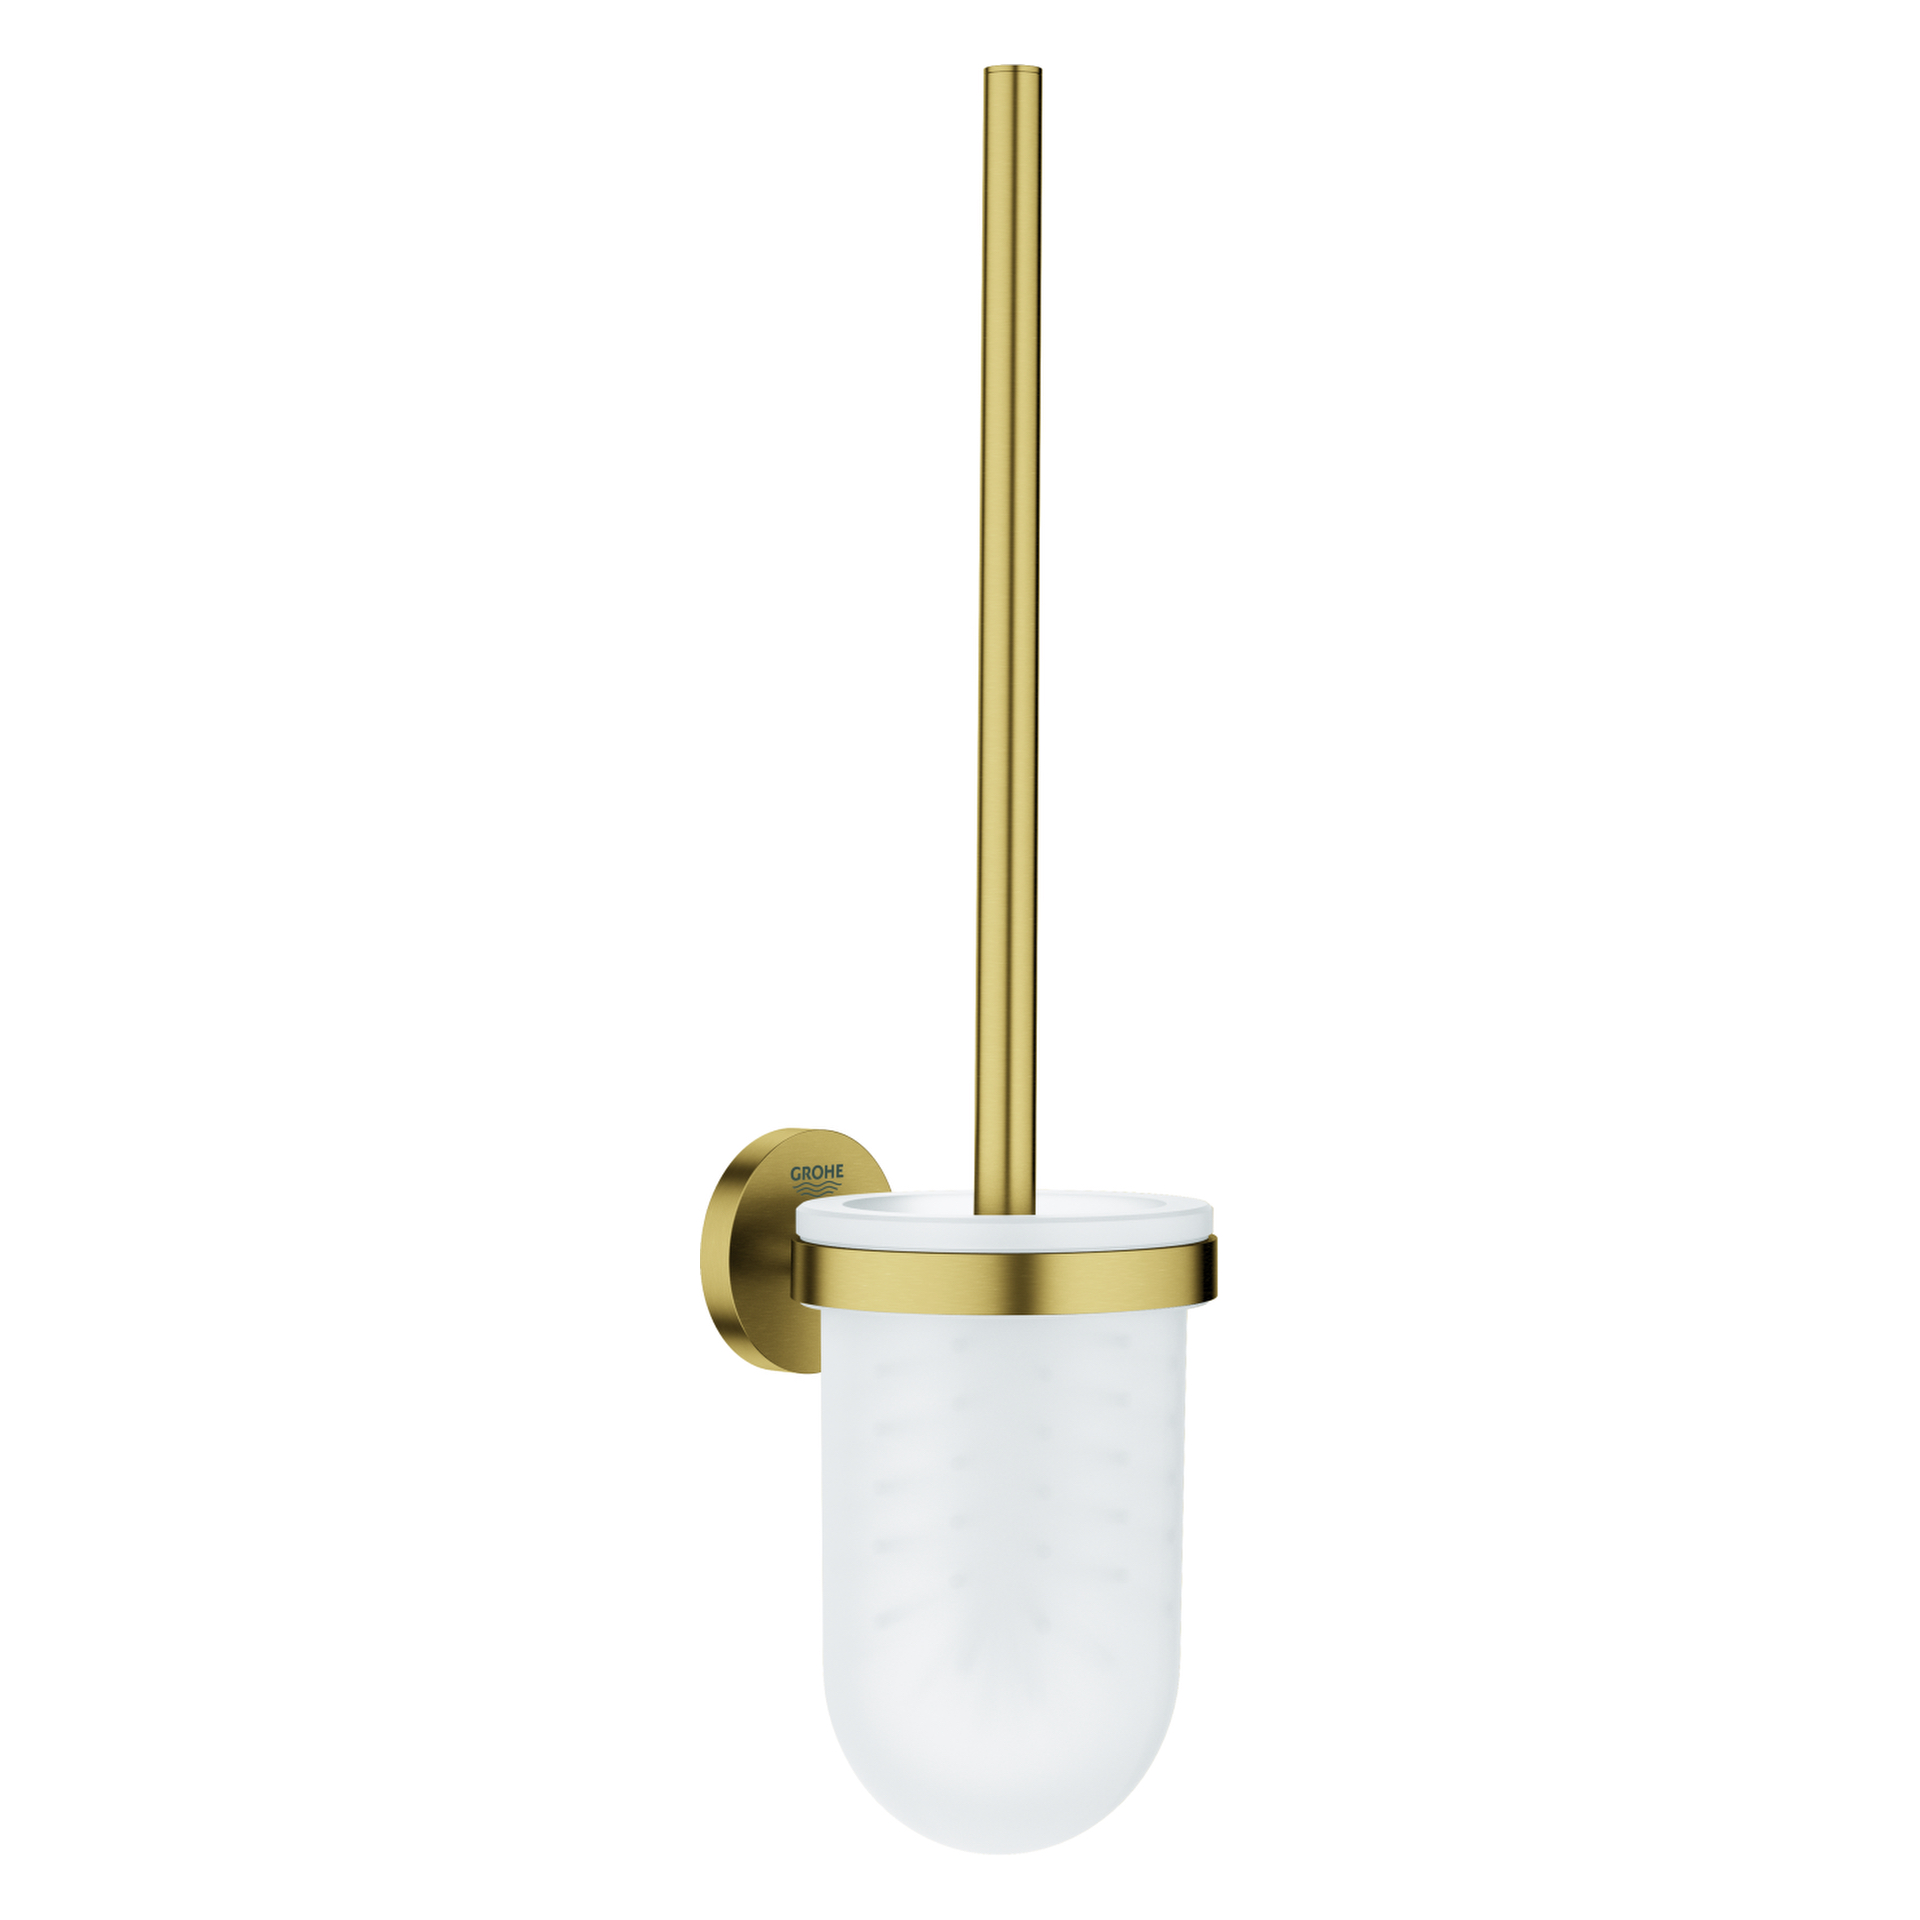 Toilettenbürstengarnitur Essentials 40374_1, Material Glas/Metall, Wandmontage, chrom/glas